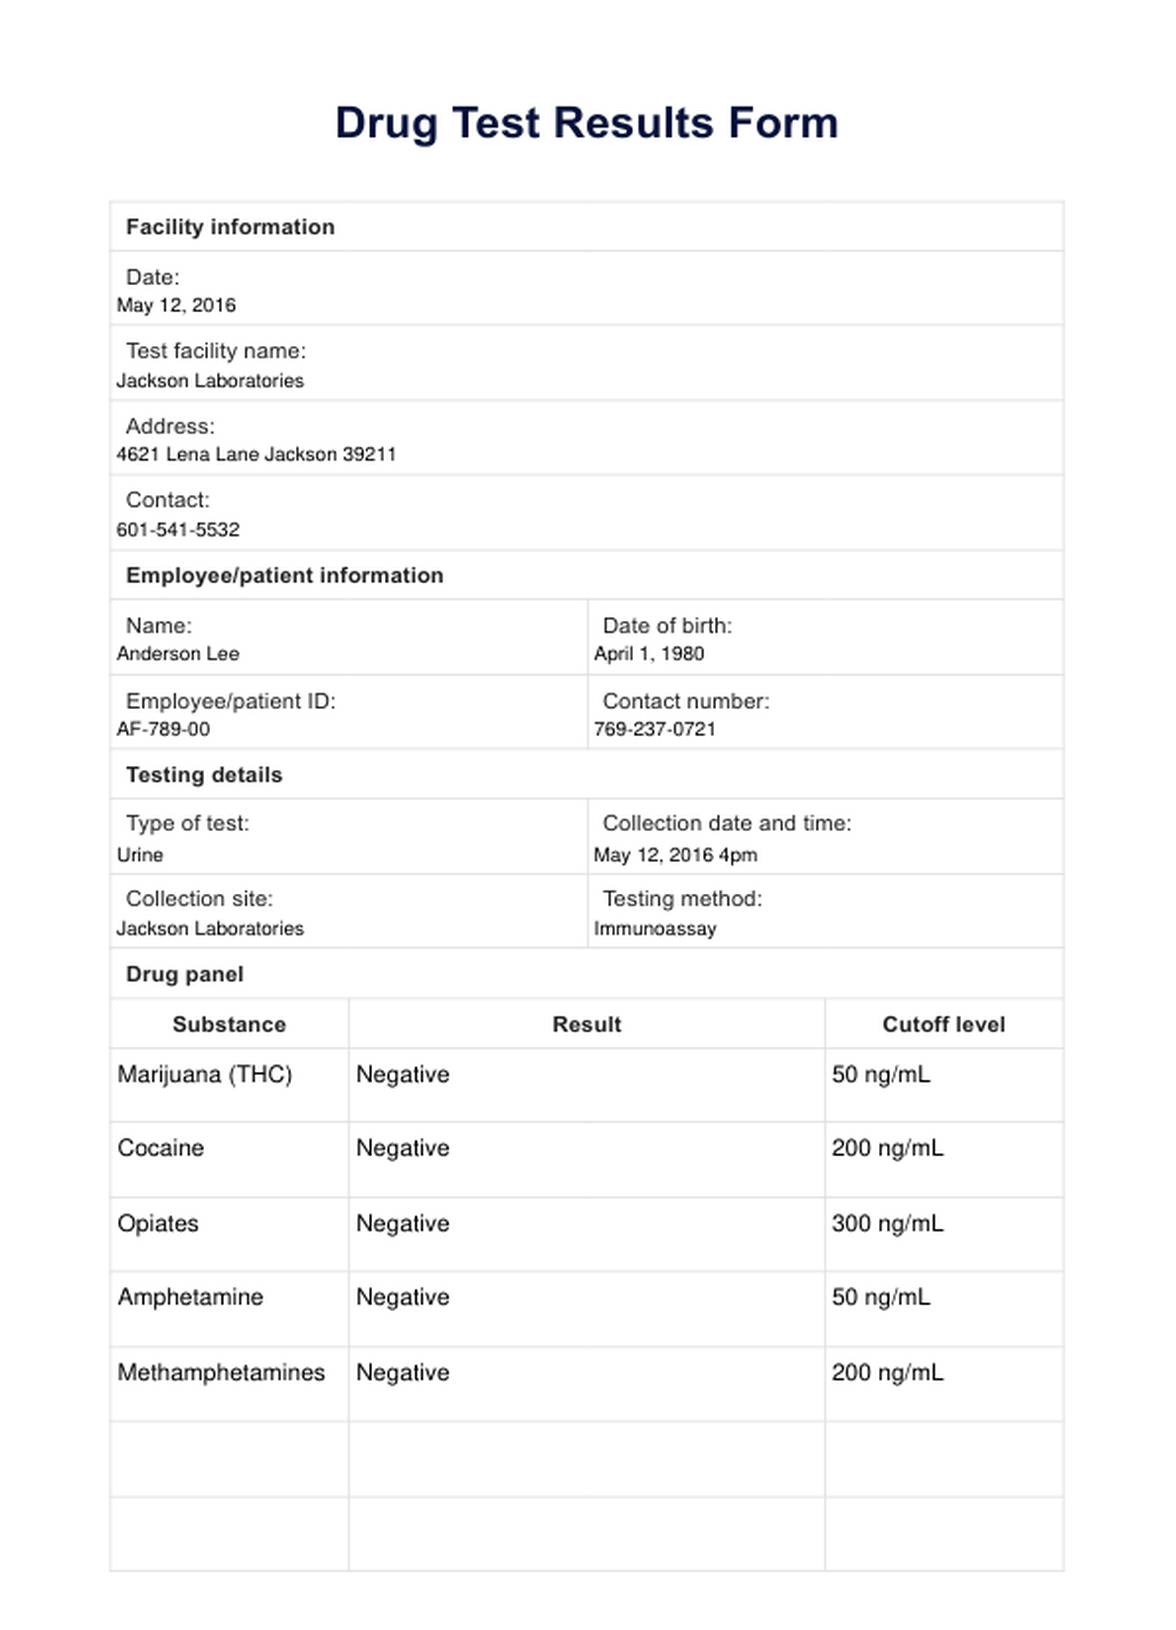 Drug Test Results Form PDF Example